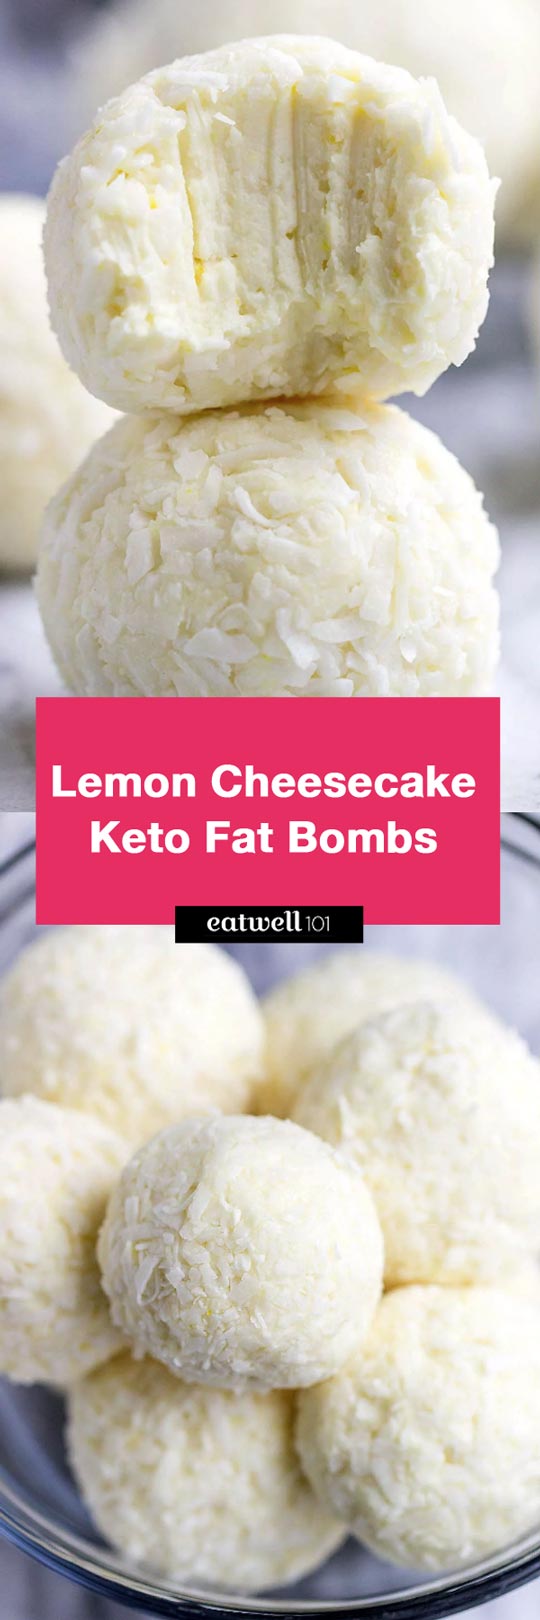 Lemon Cheesecake Keto Fat Bombs Recipe – Keto Fat Bombs for Ketosis ...